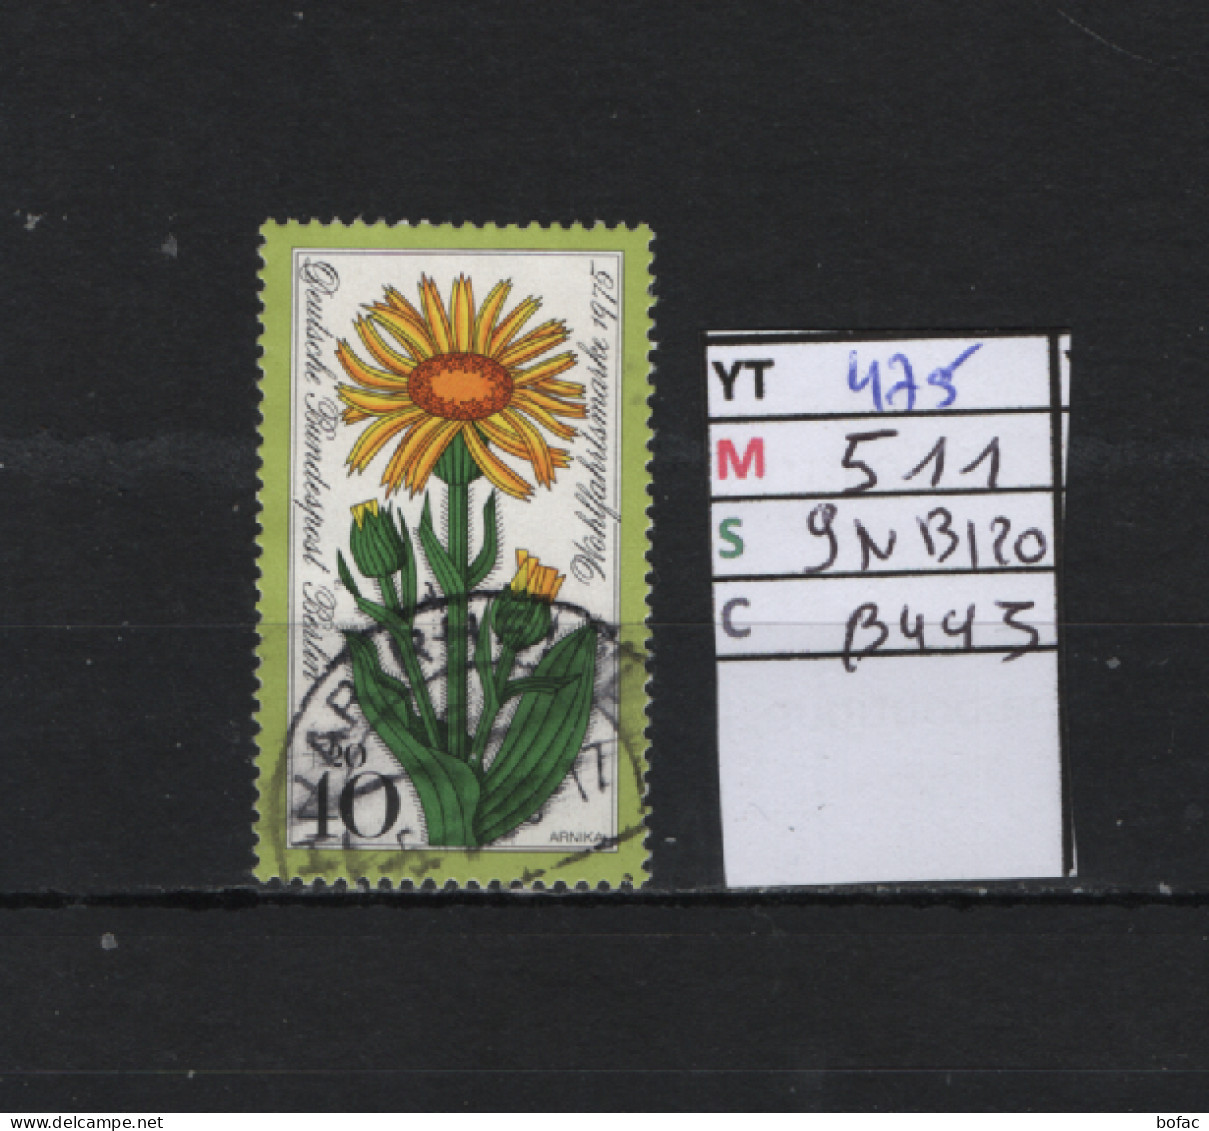 P. FIXE Obl 475 YT 511 MIC 9NB120 SCO B495 GIB Arnica Fleur 1975  *Berlin* 75/03 - Used Stamps